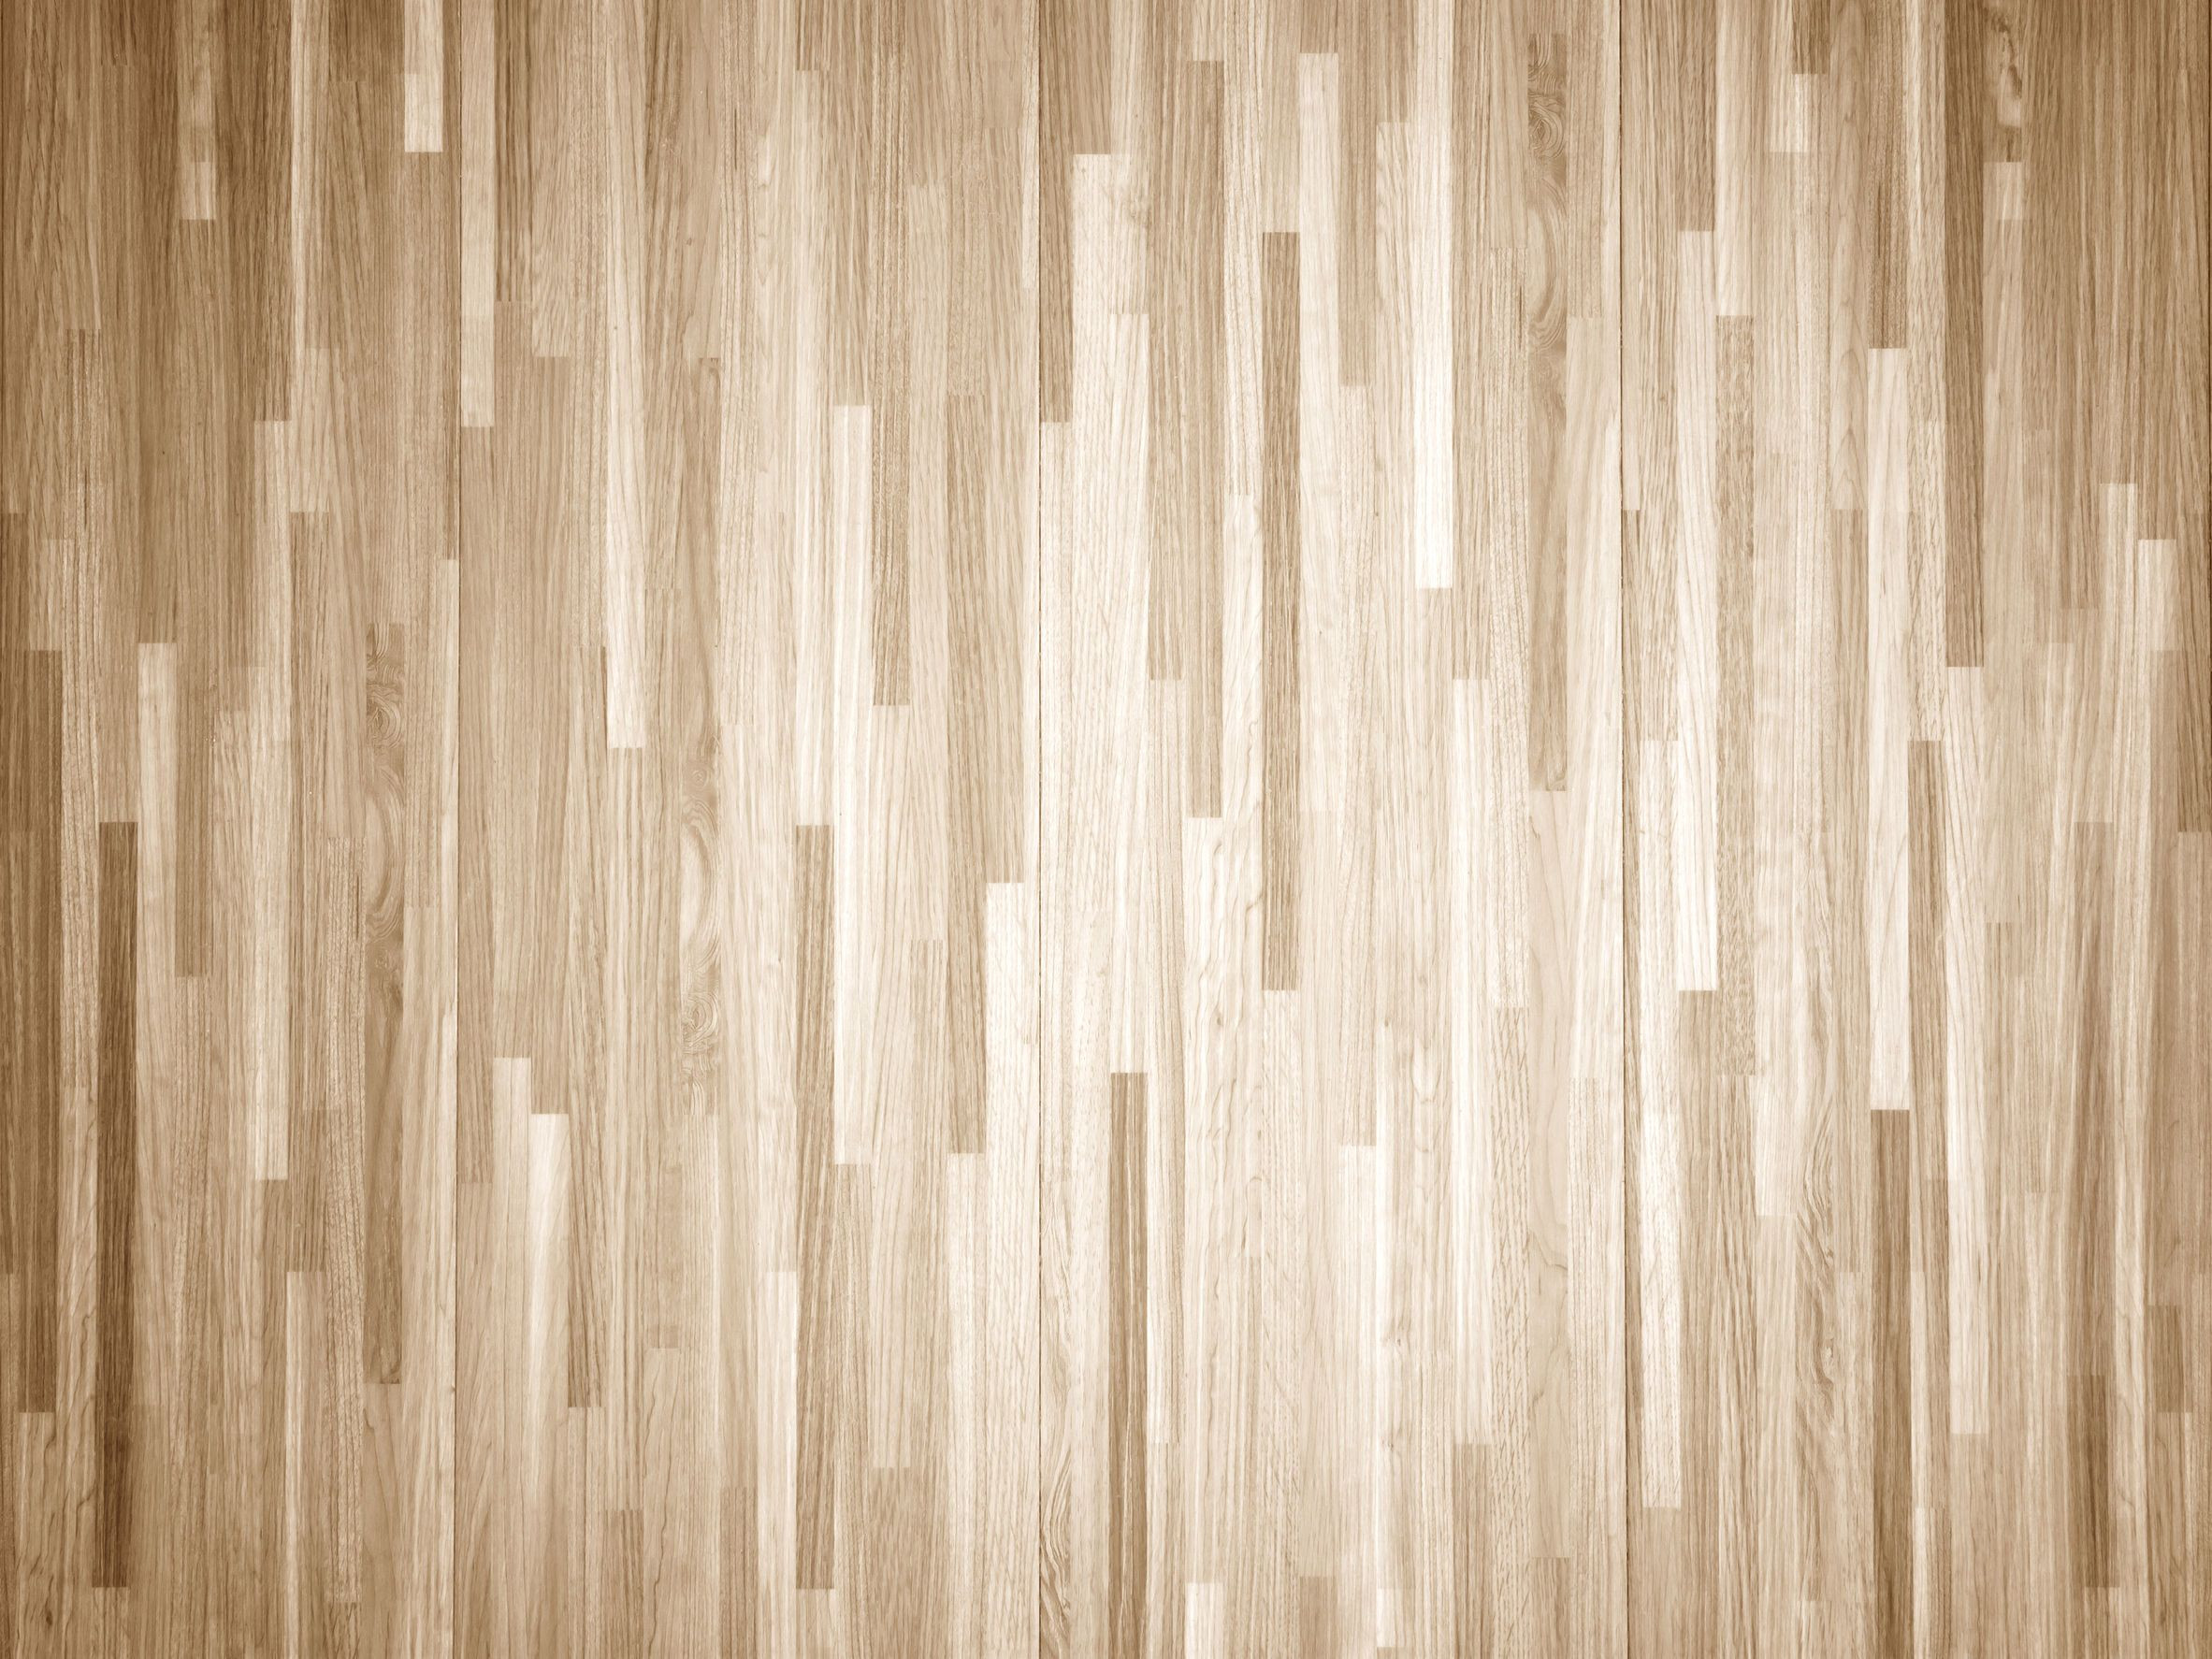 21 Stunning Refinishing Hardwood Floors How Long Does It Take 2024 free download refinishing hardwood floors how long does it take of how to chemically strip wood floors woodfloordoctor com regarding you